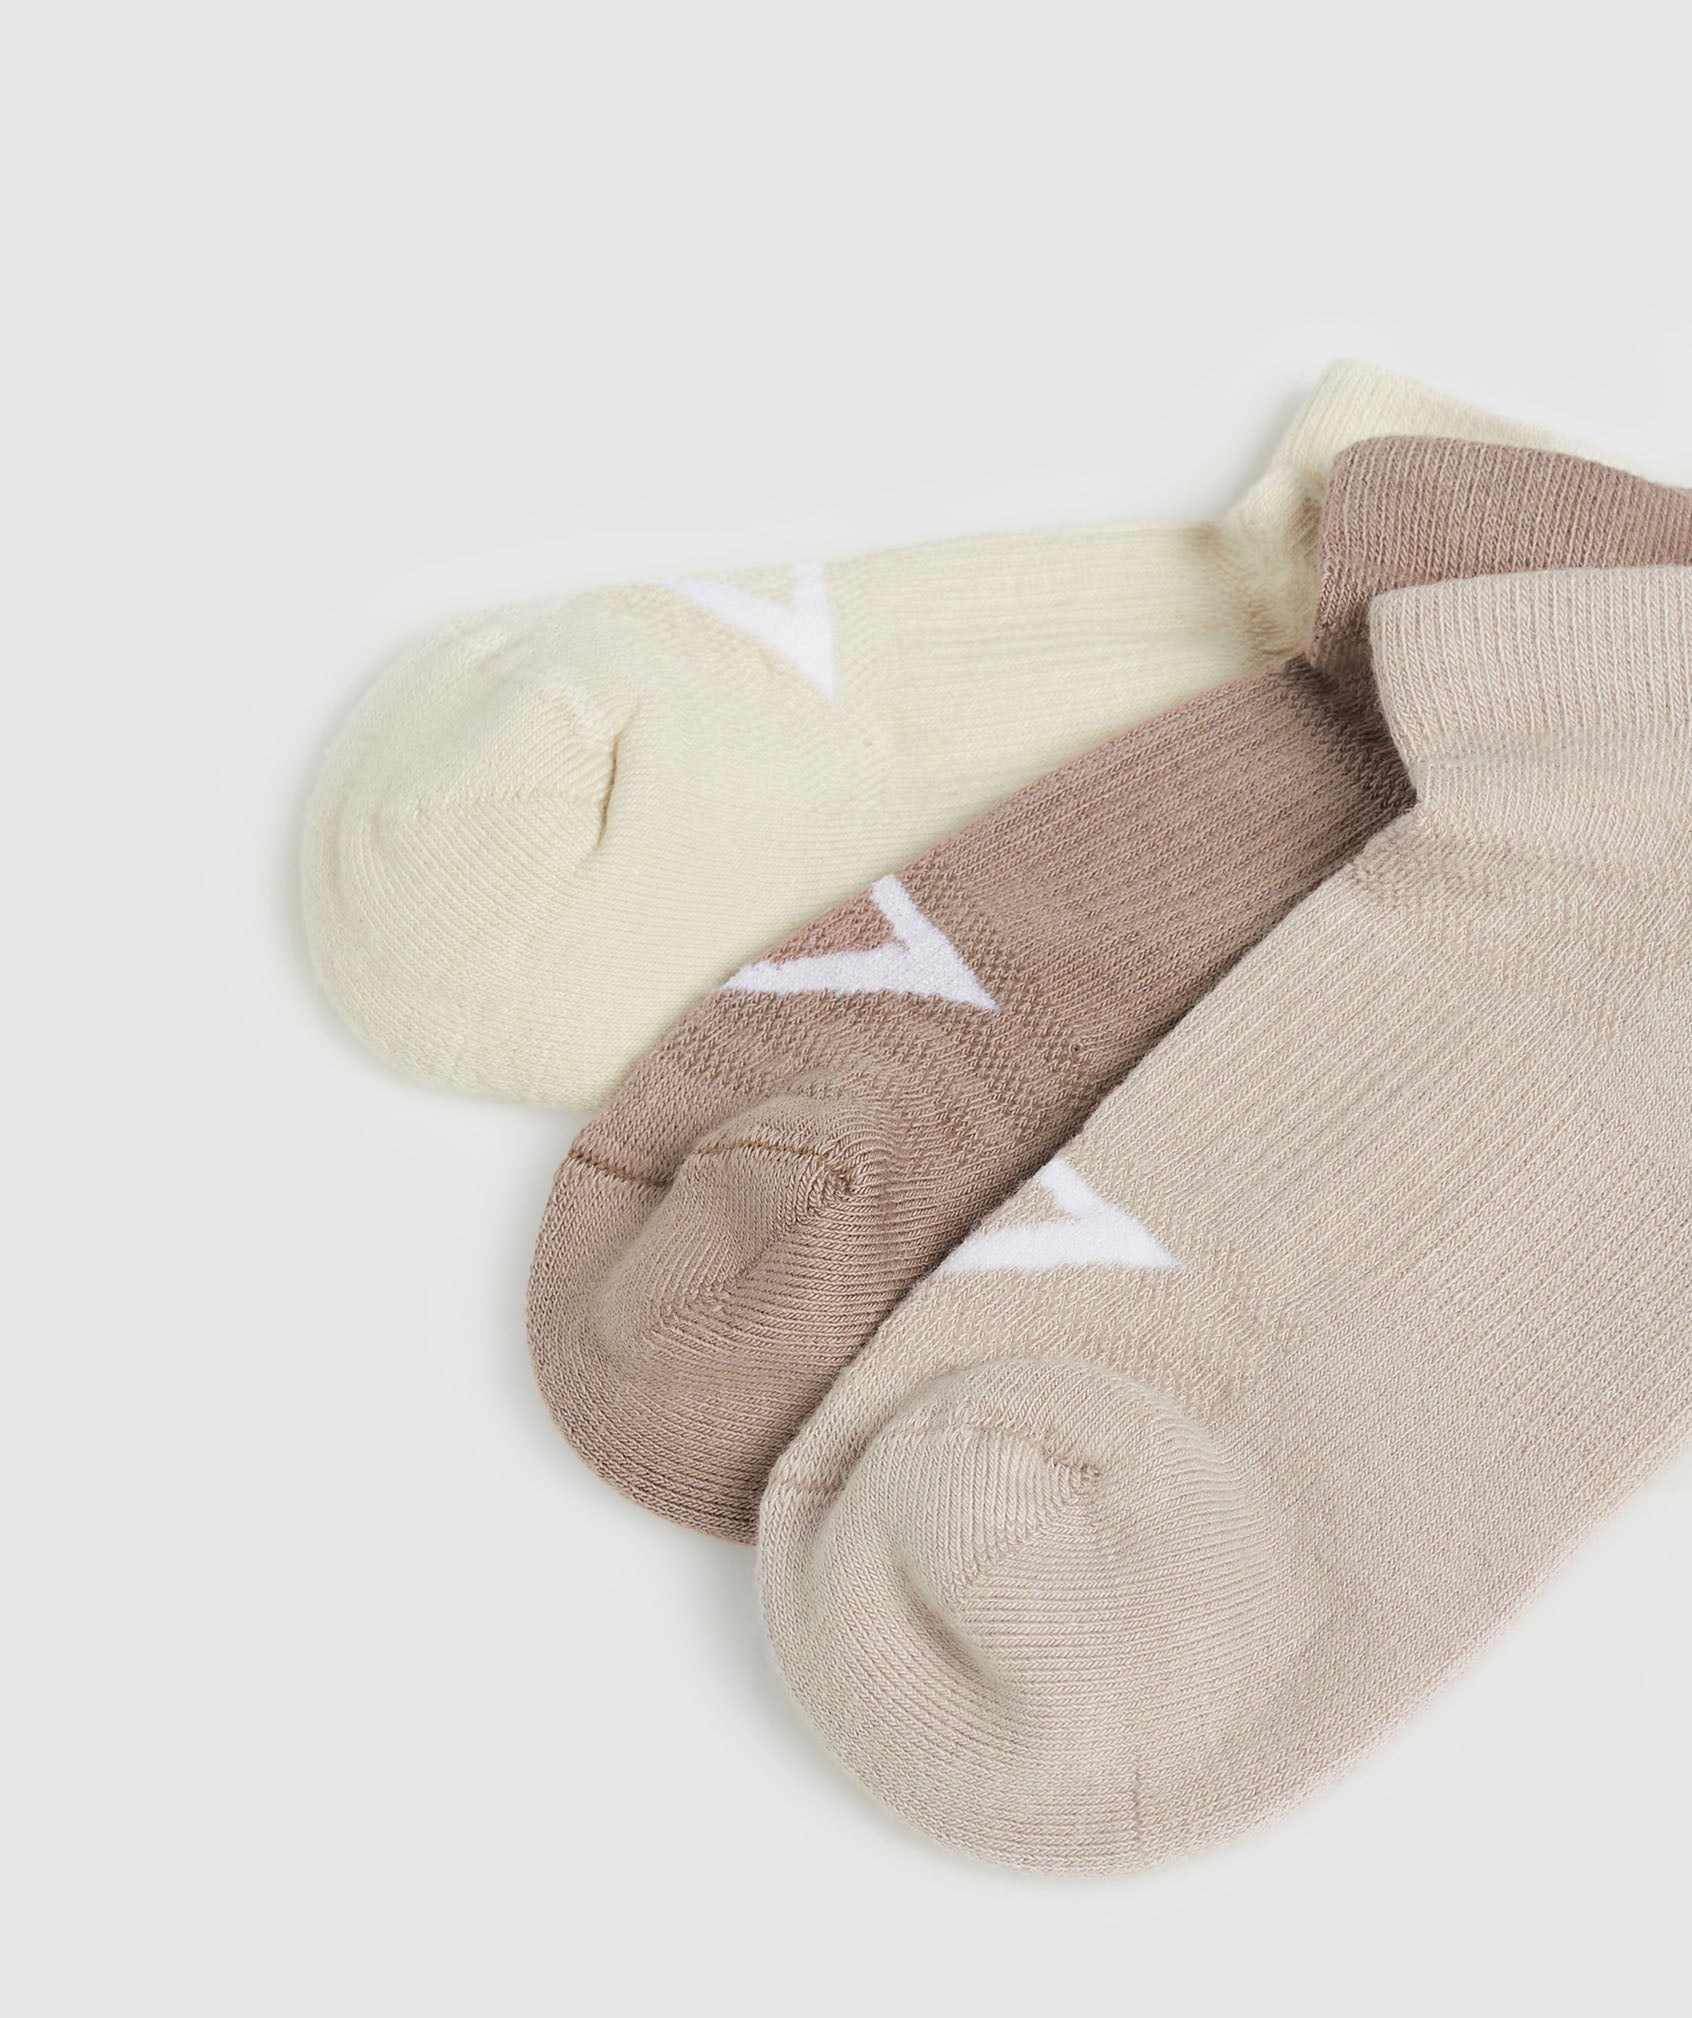 Ankle Socks 3pk in Mocha Mauve/Stone Pink/Ecru White - view 2